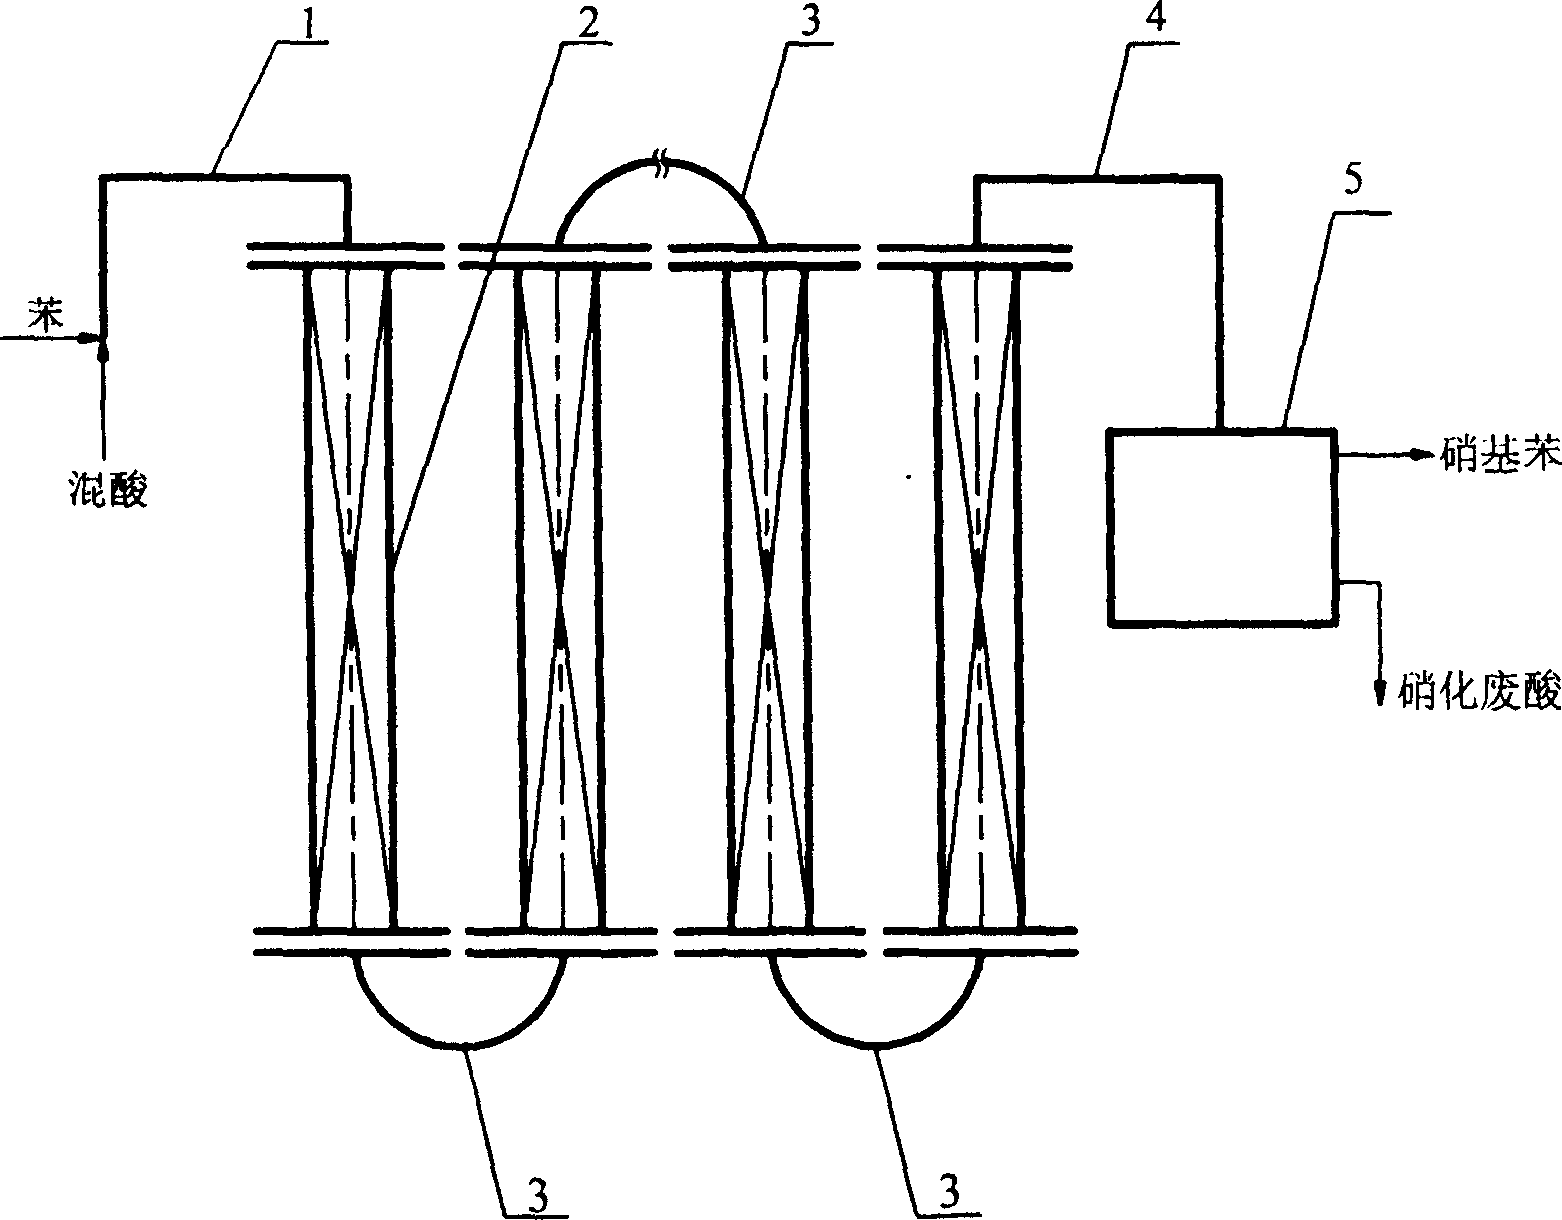 Apparatus and method for preparing nitrobenzene by nitration of tubular benzene